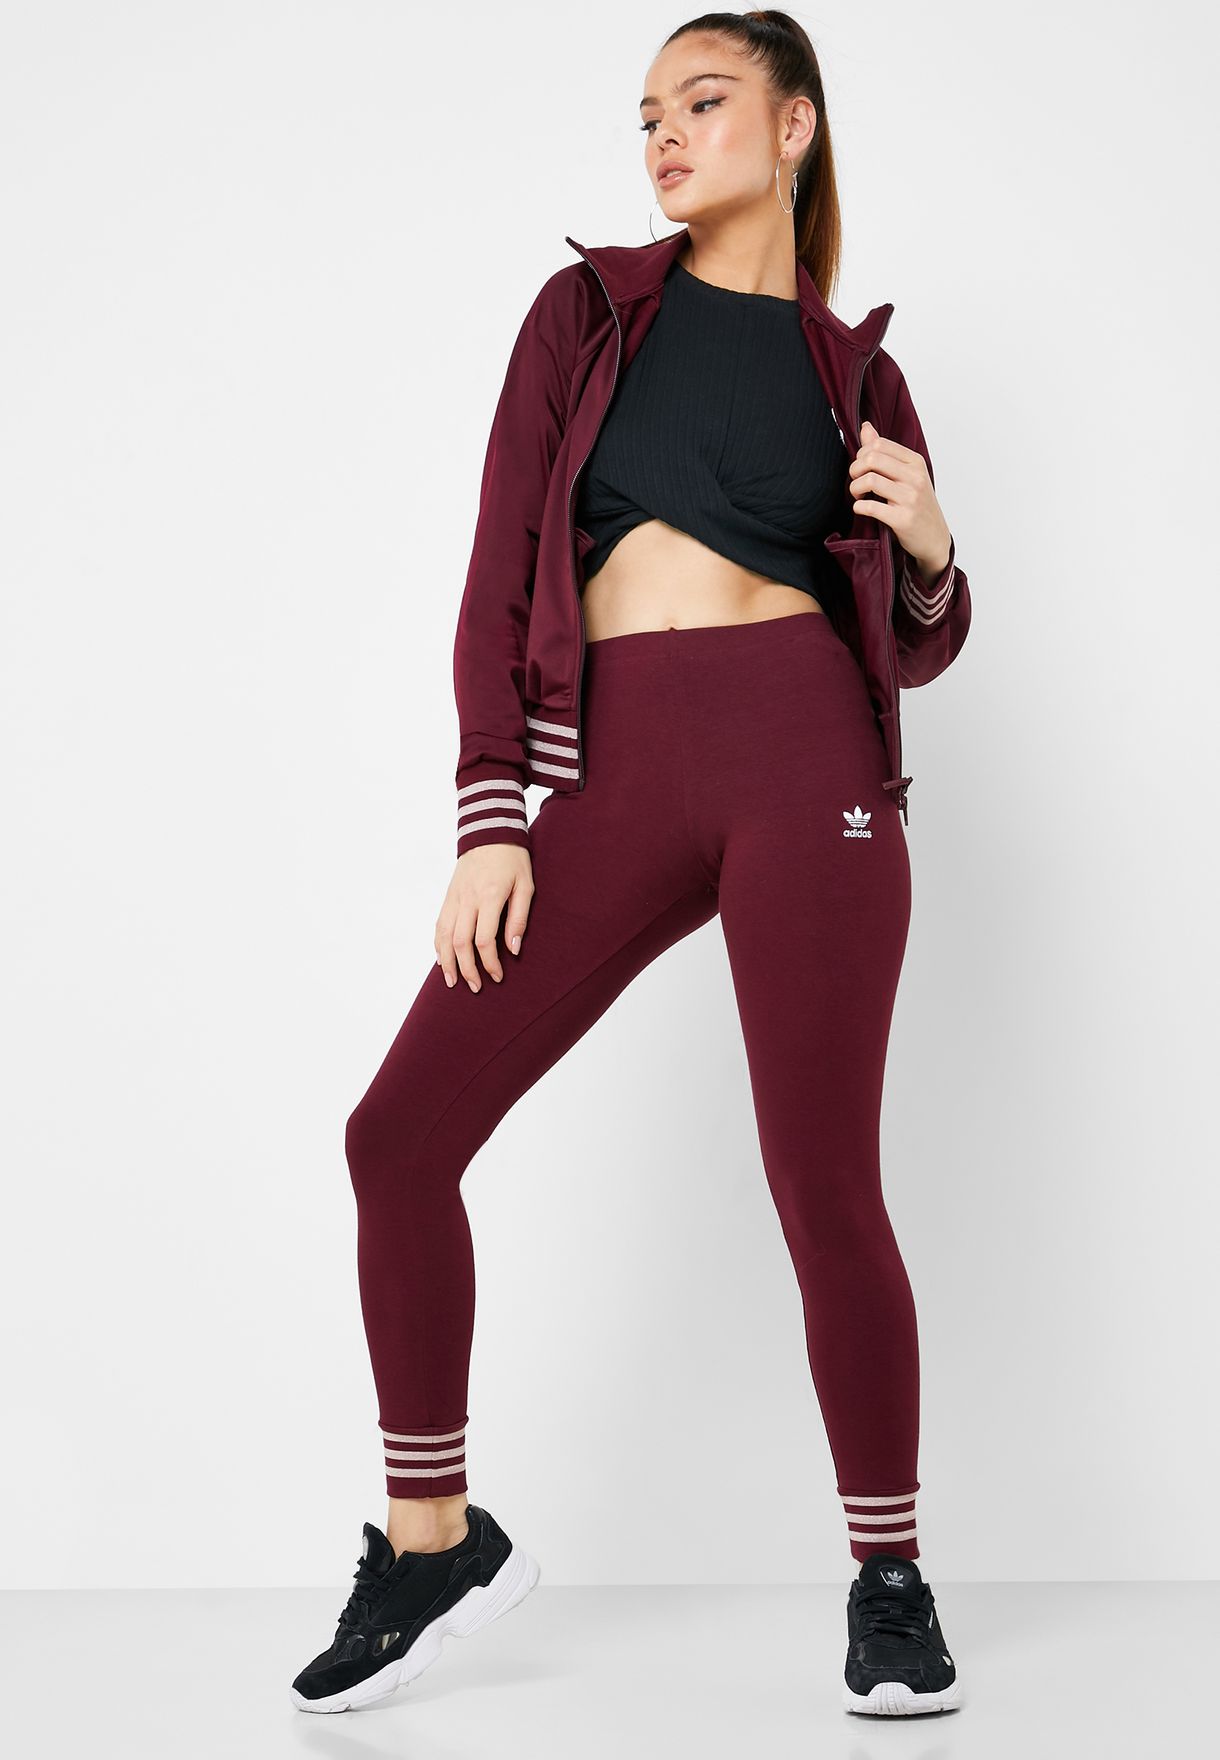 burgundy adidas leggings and top